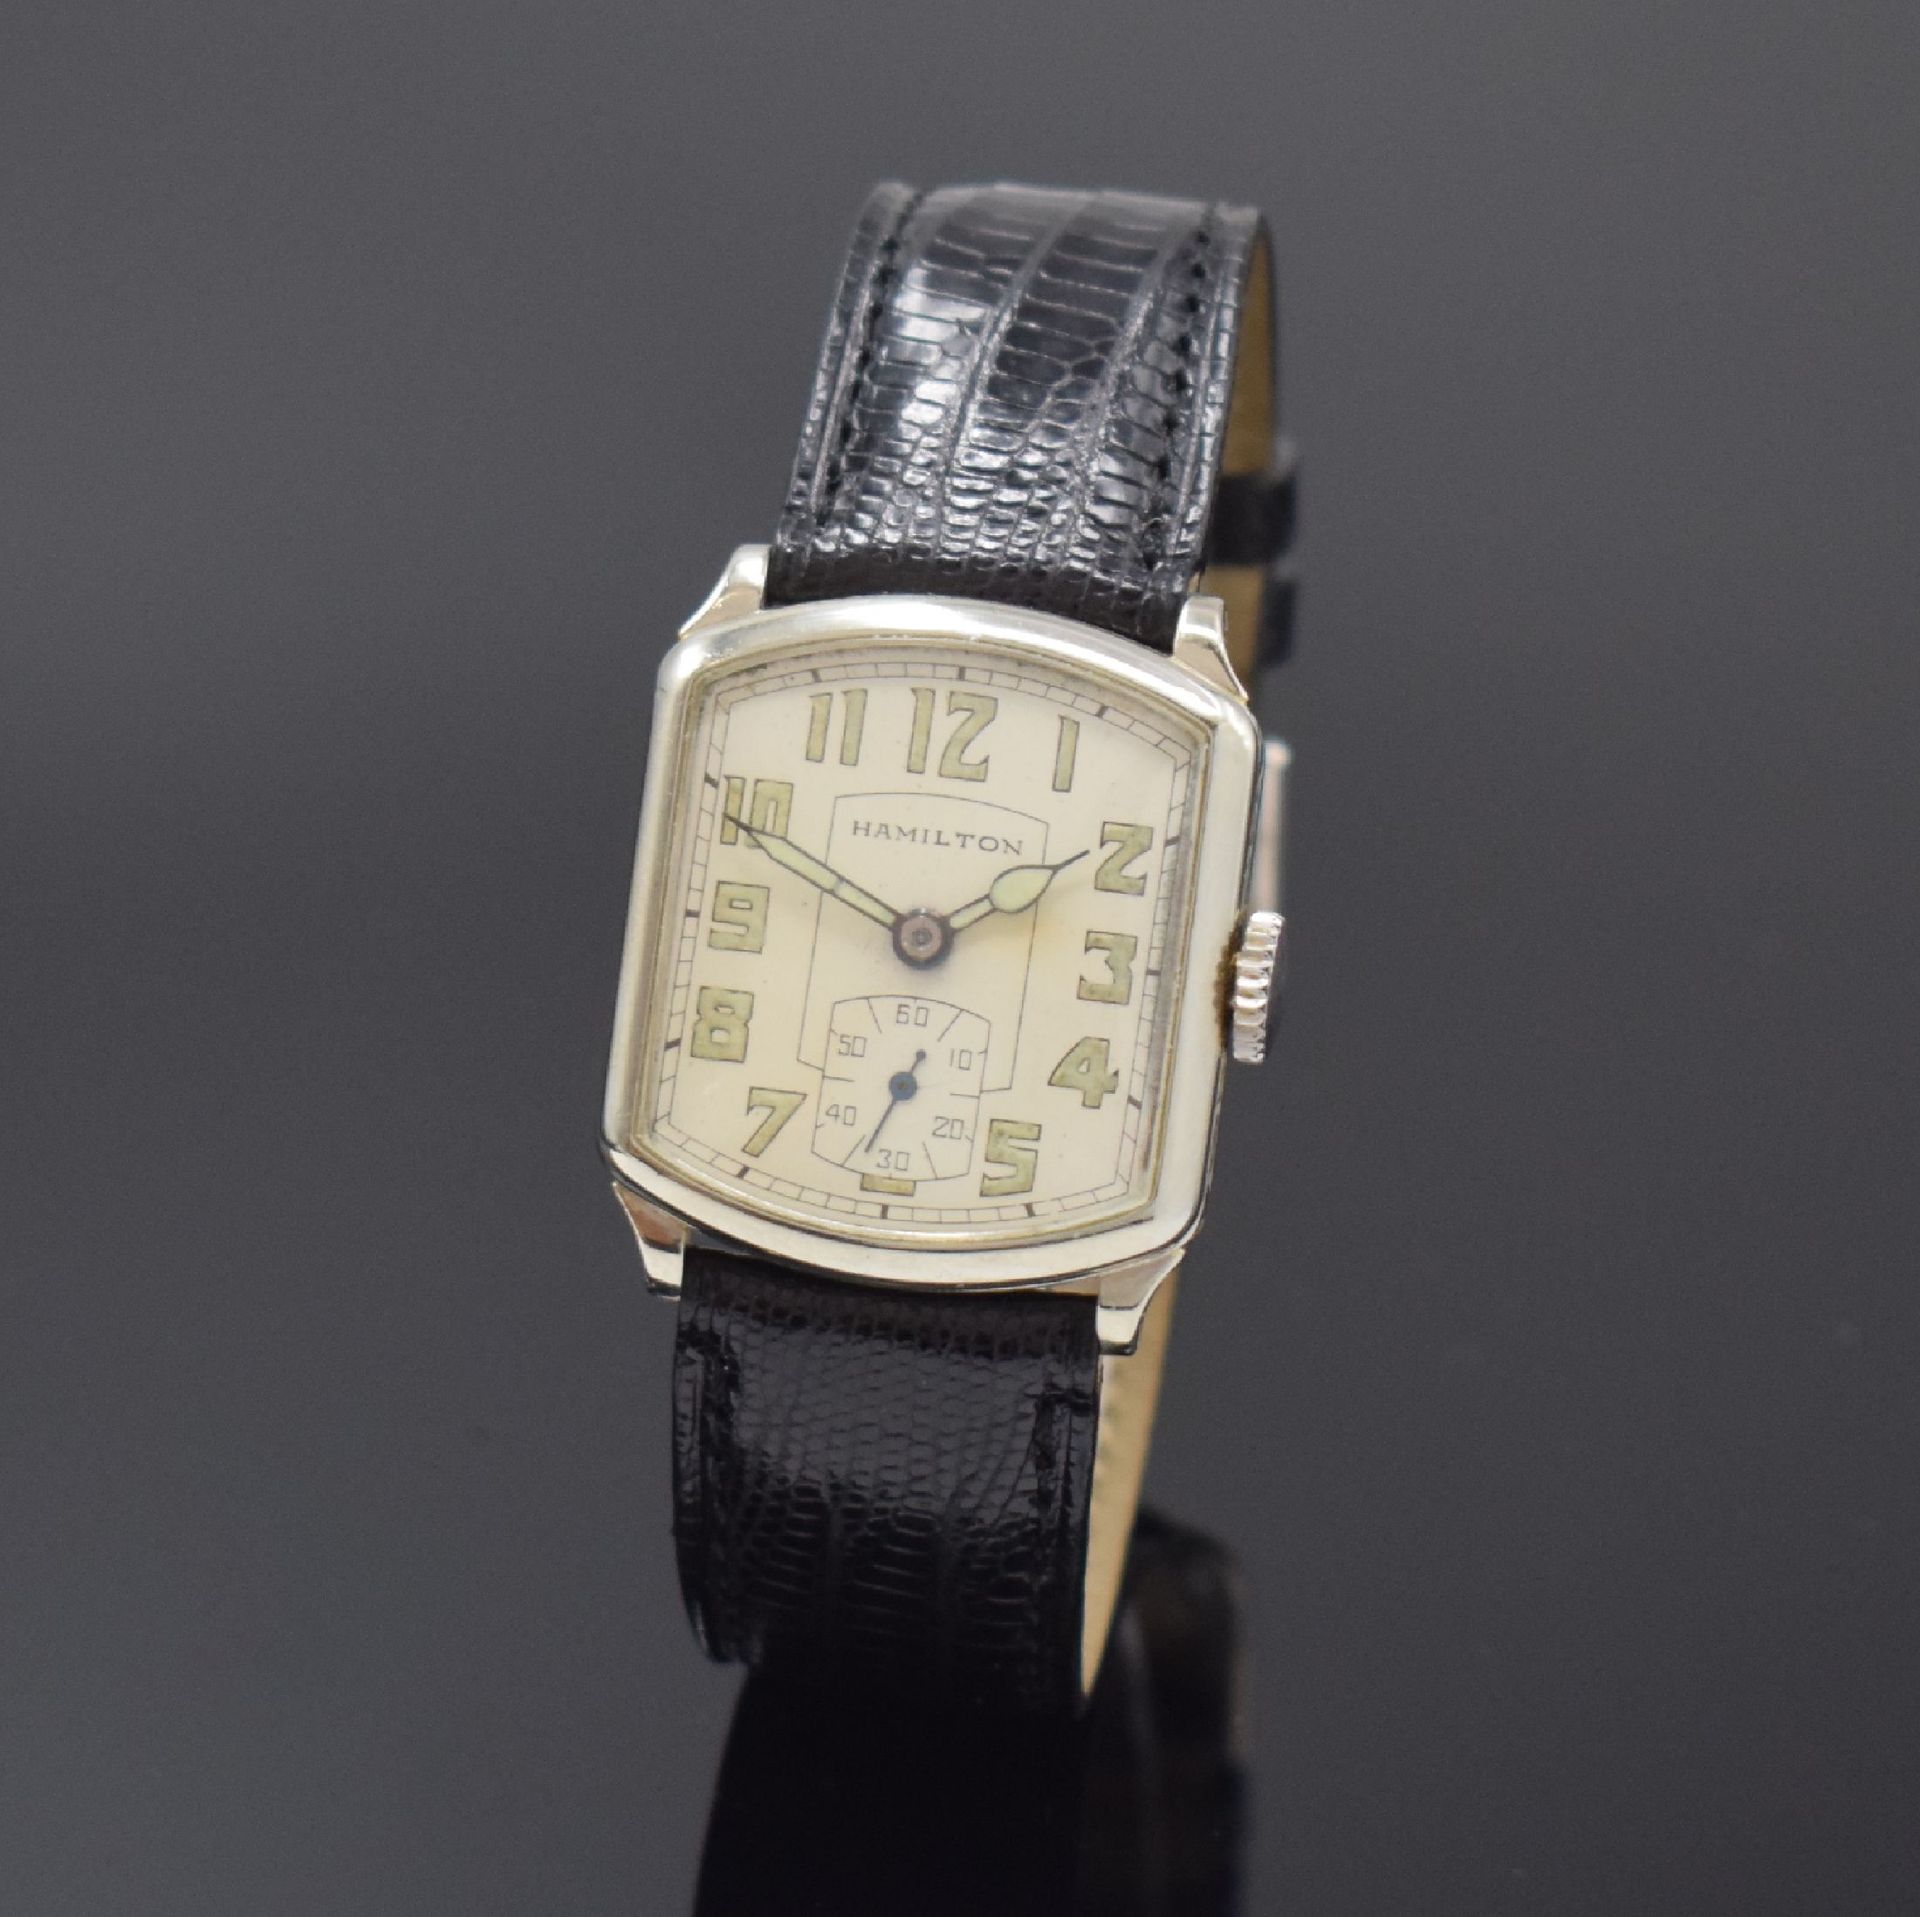 Null HAMILTON montre-bracelet en or blanc 14k, USA vers 1930, remontage manuel, &hellip;